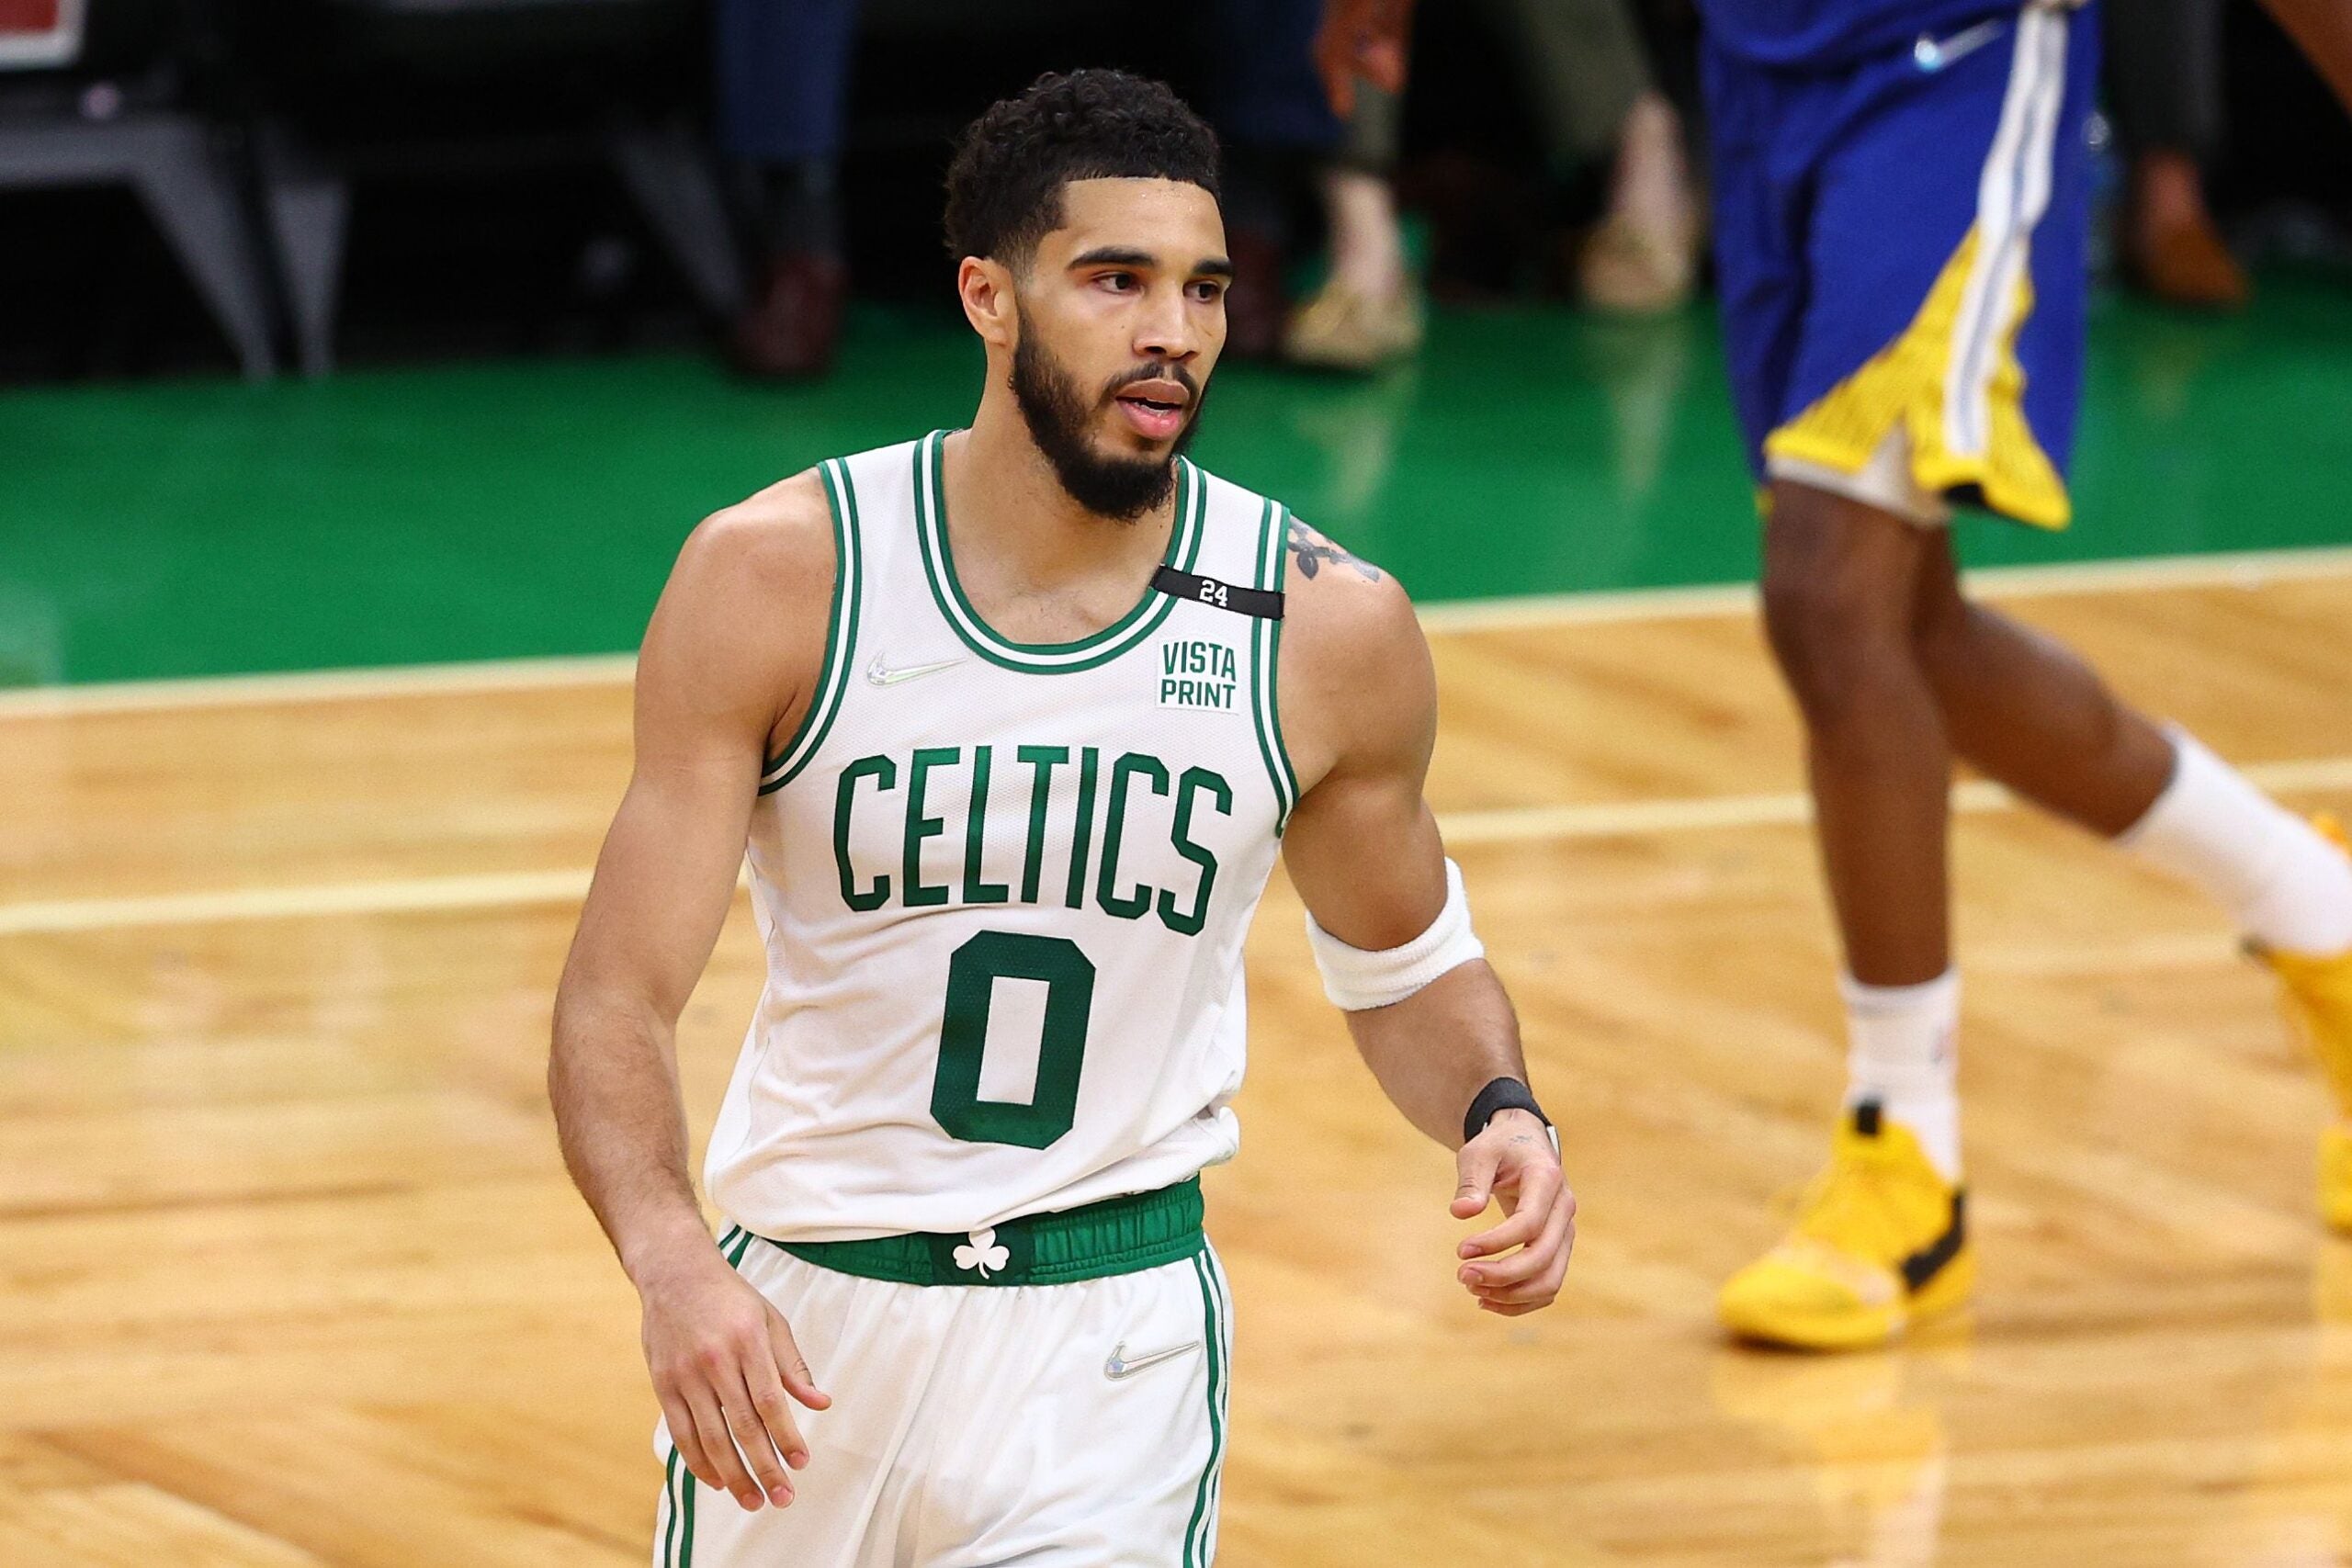 Celtics become title favorites on multiple sportsbooks after initial moves